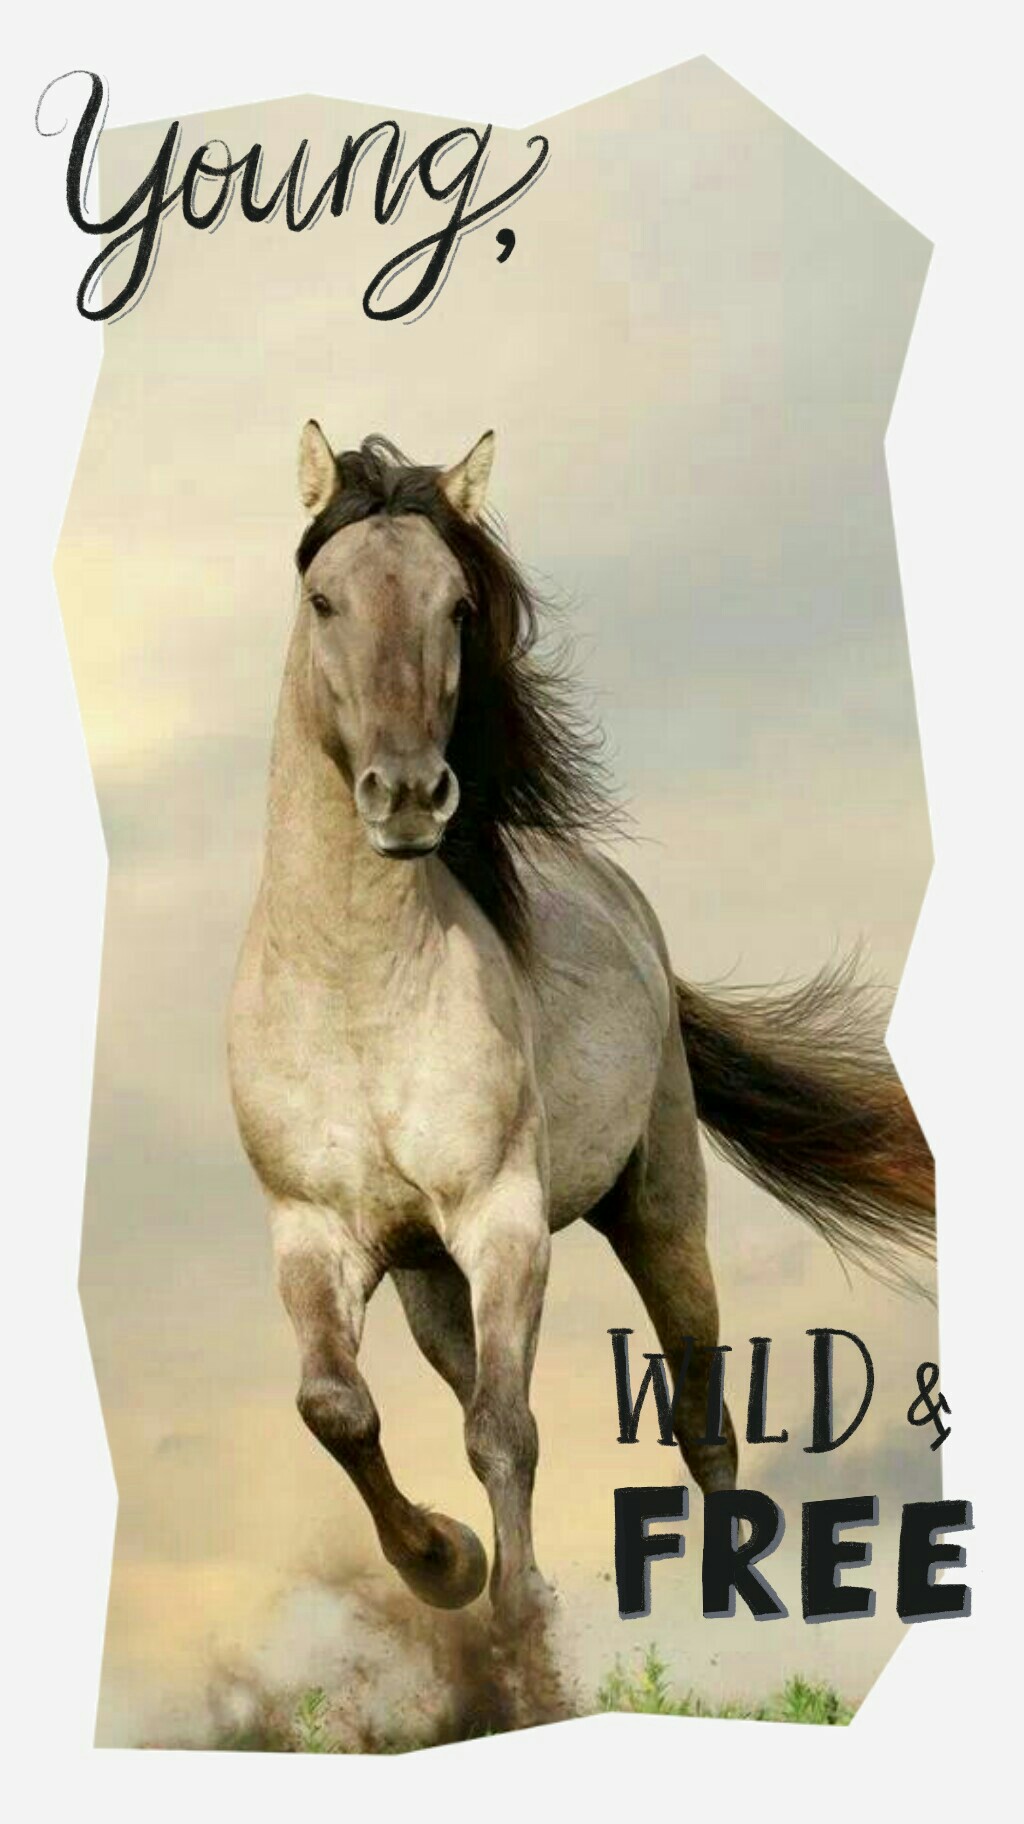 Wild horses still roam. Protect them!